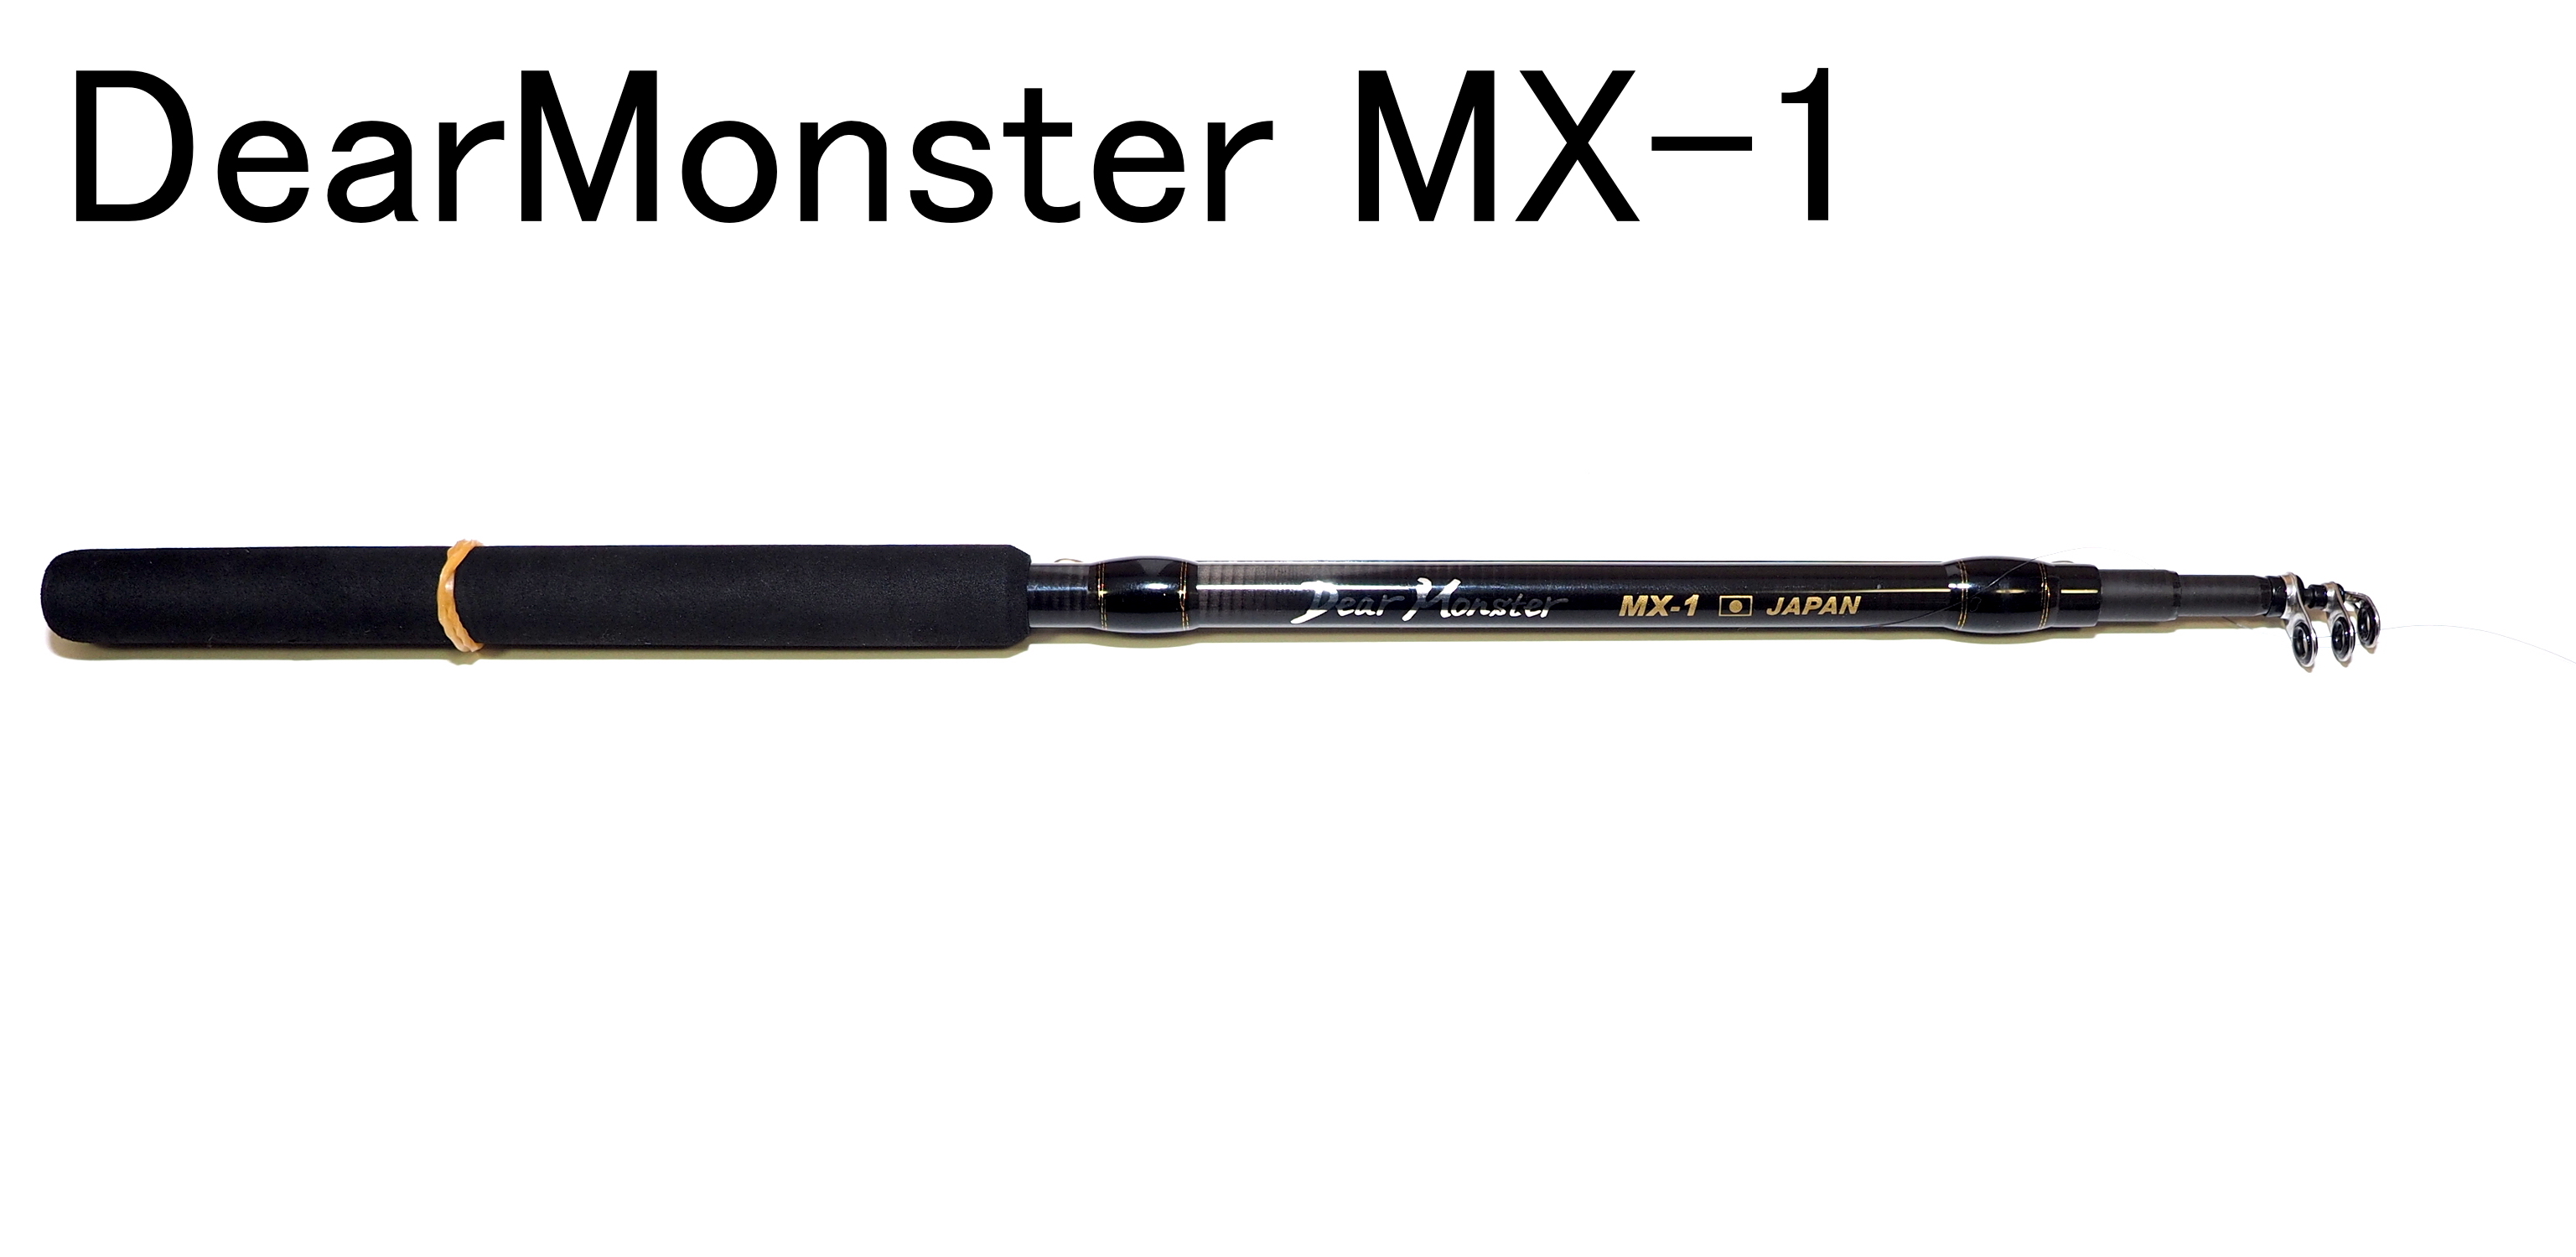 DearMonster MX-1について